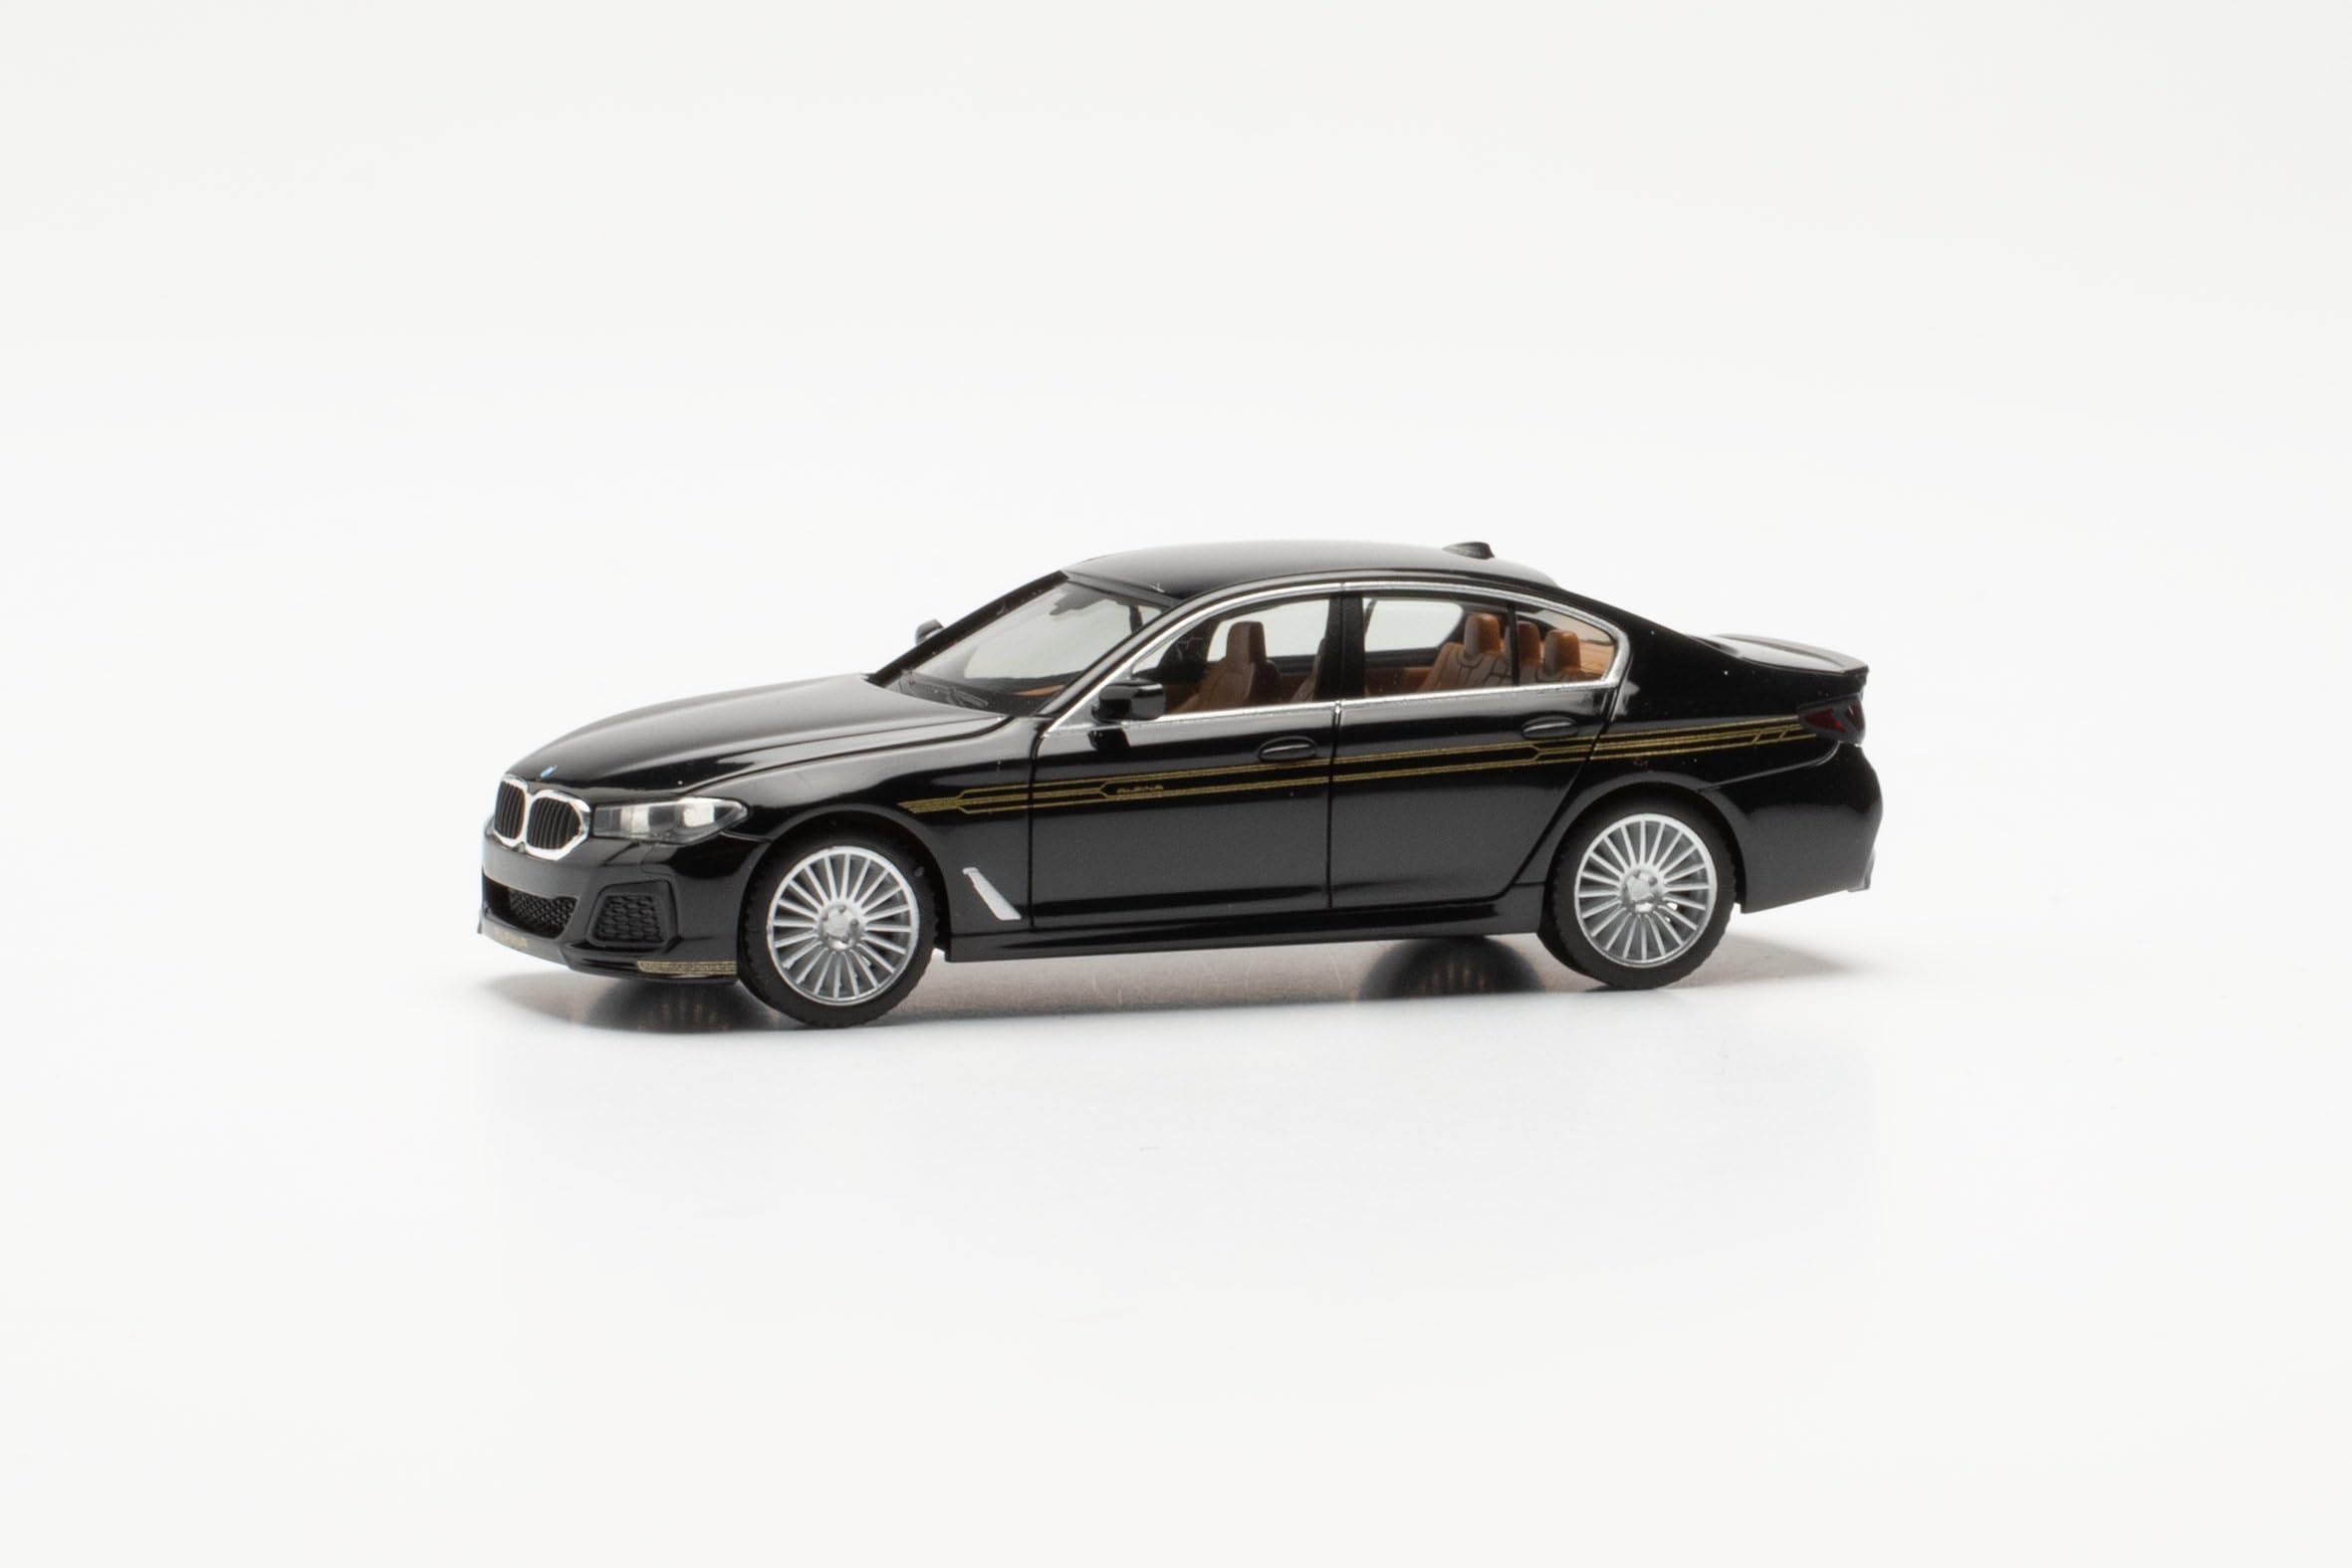 herpa Modellauto BMW Alpina B5 Limousine, Miniatur im Maßstab 1:87, Sammlerstück, Made in Germany, Modell aus Kunststoff